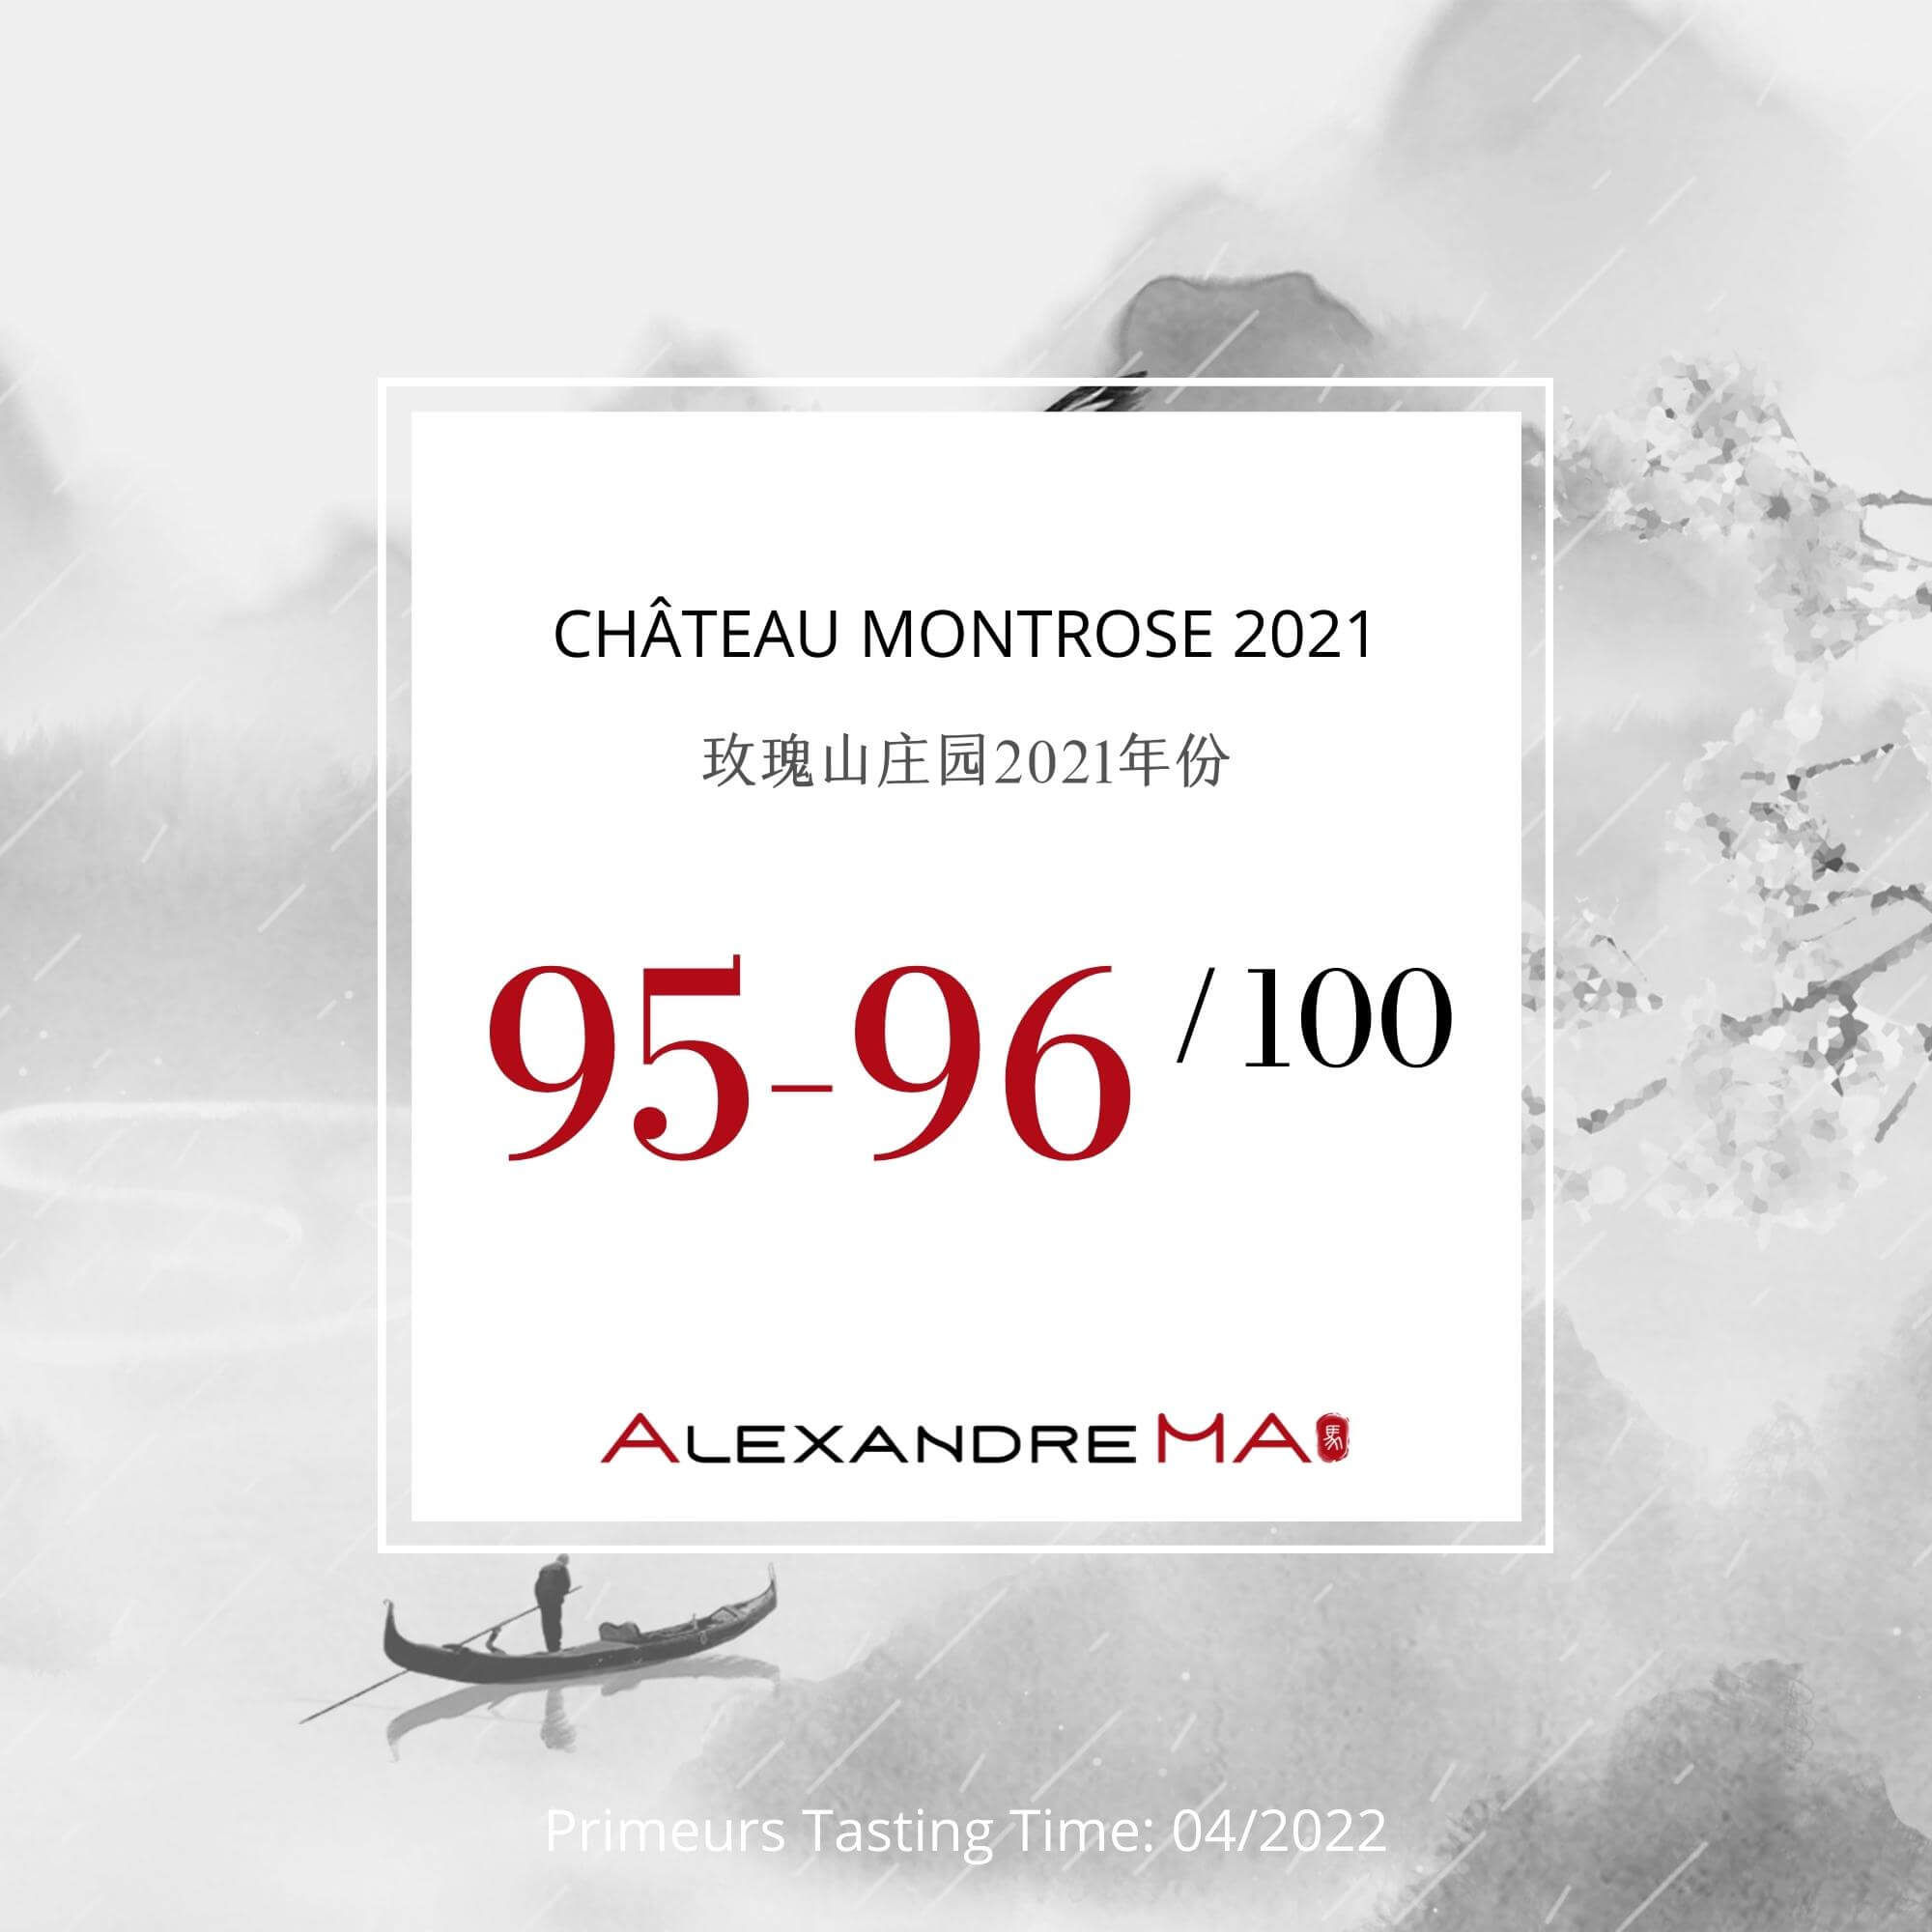 Château Montrose 2021 - Alexandre MA